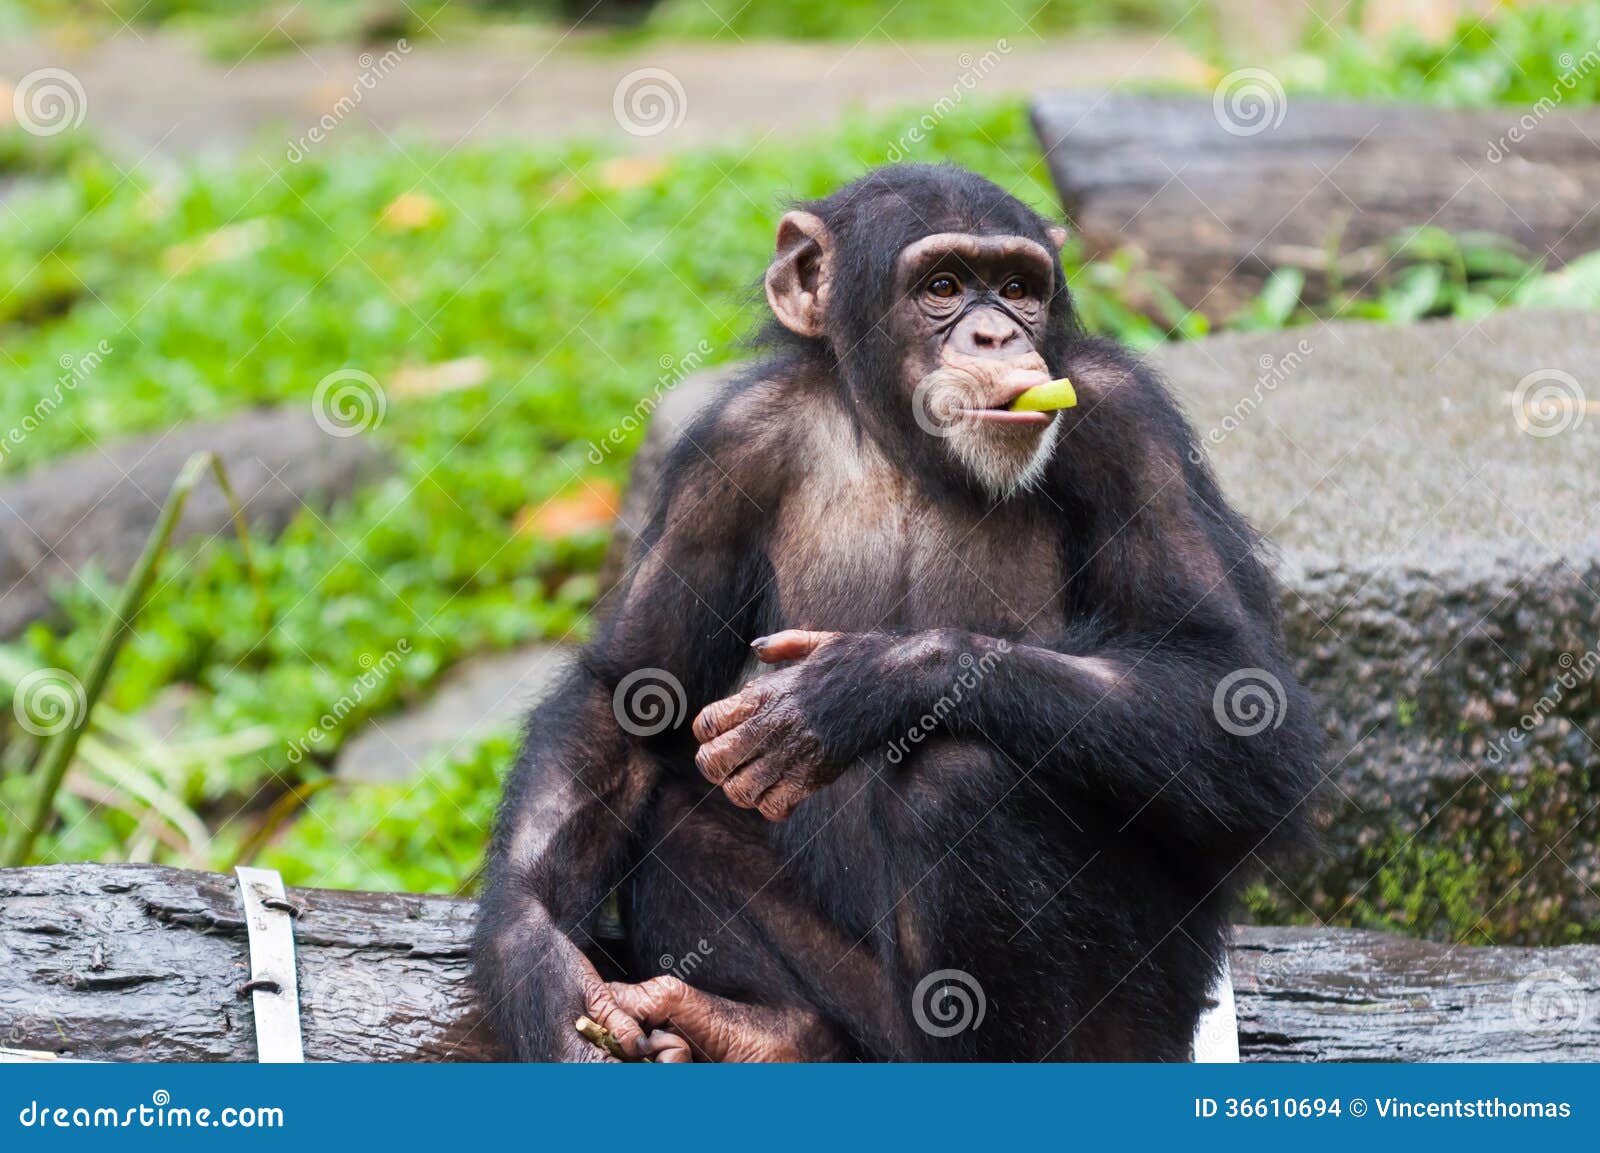 Common Chimpanzee stock photo. Image of animals, eating - 36610694